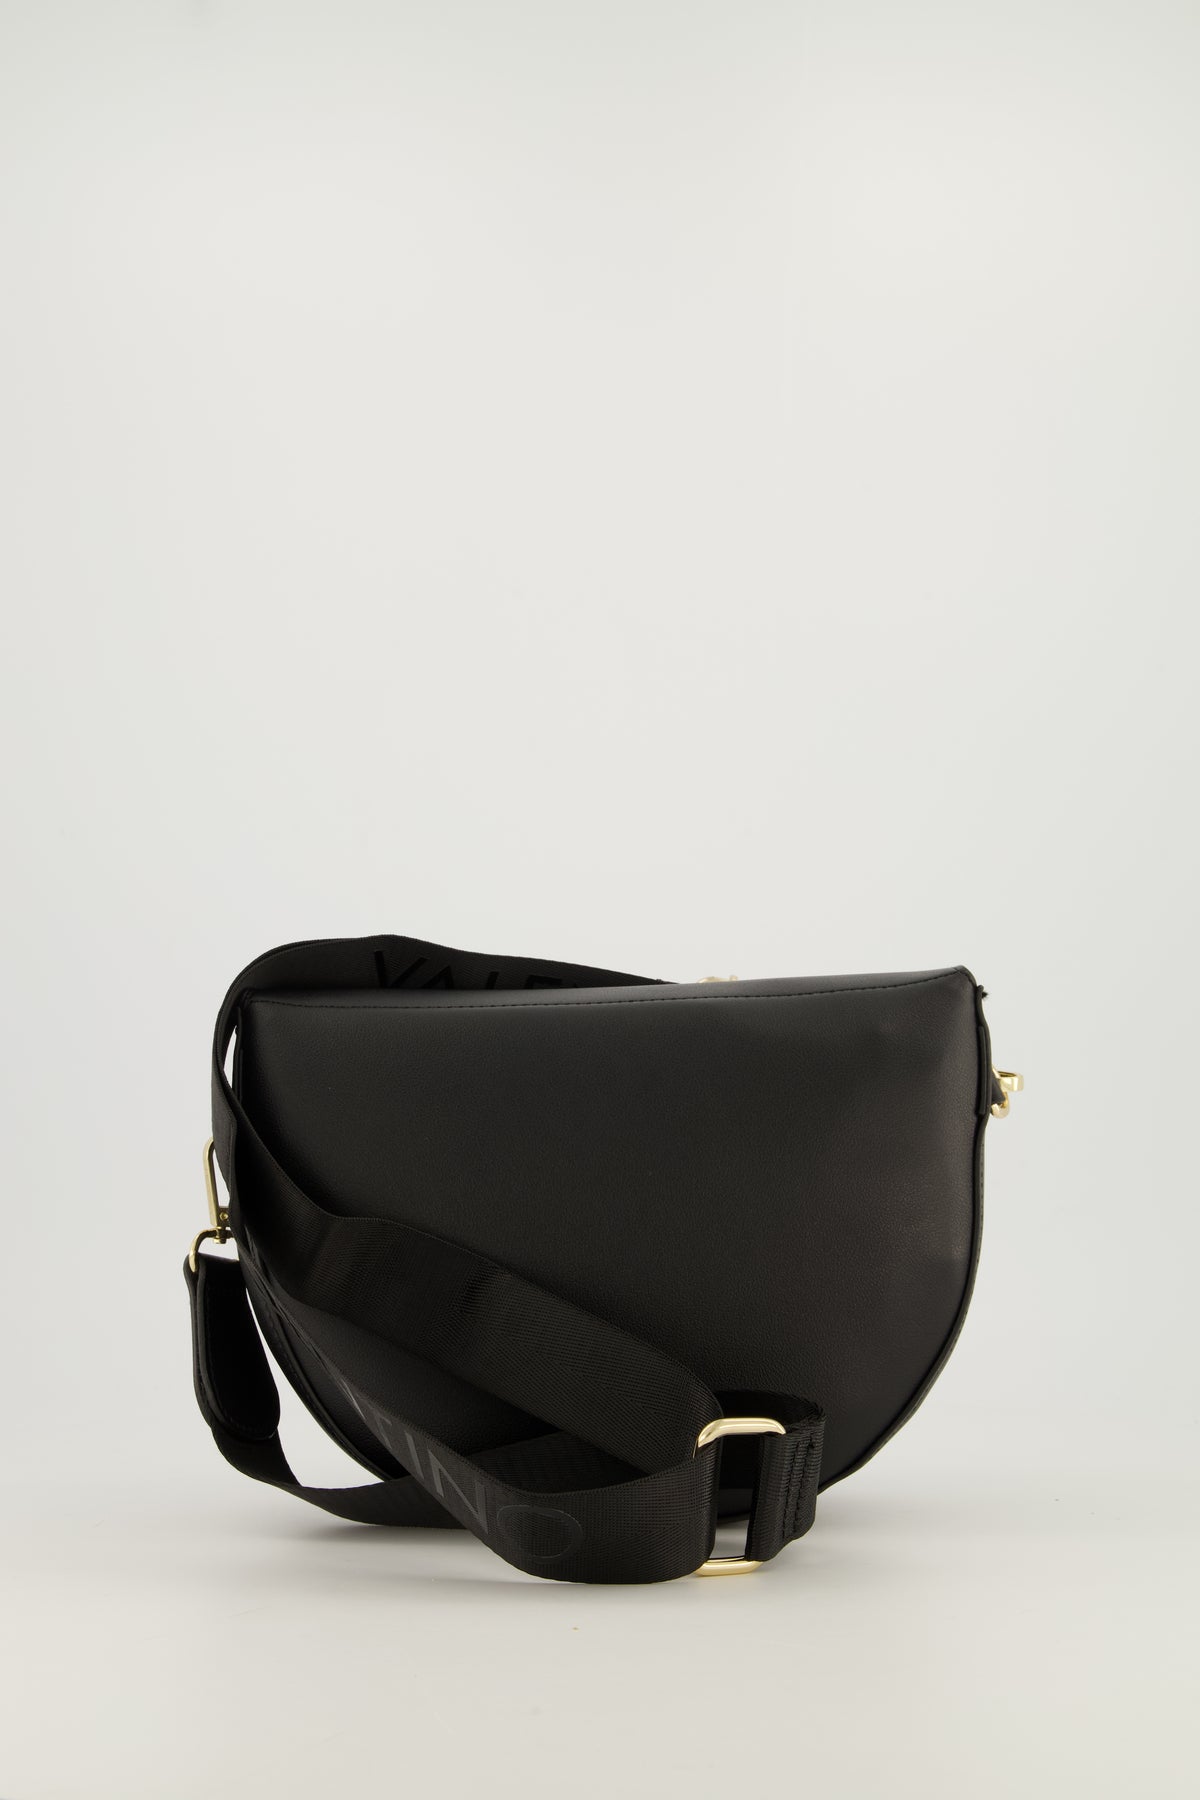 Valentino Bags Bigs cross body saddle bag in black